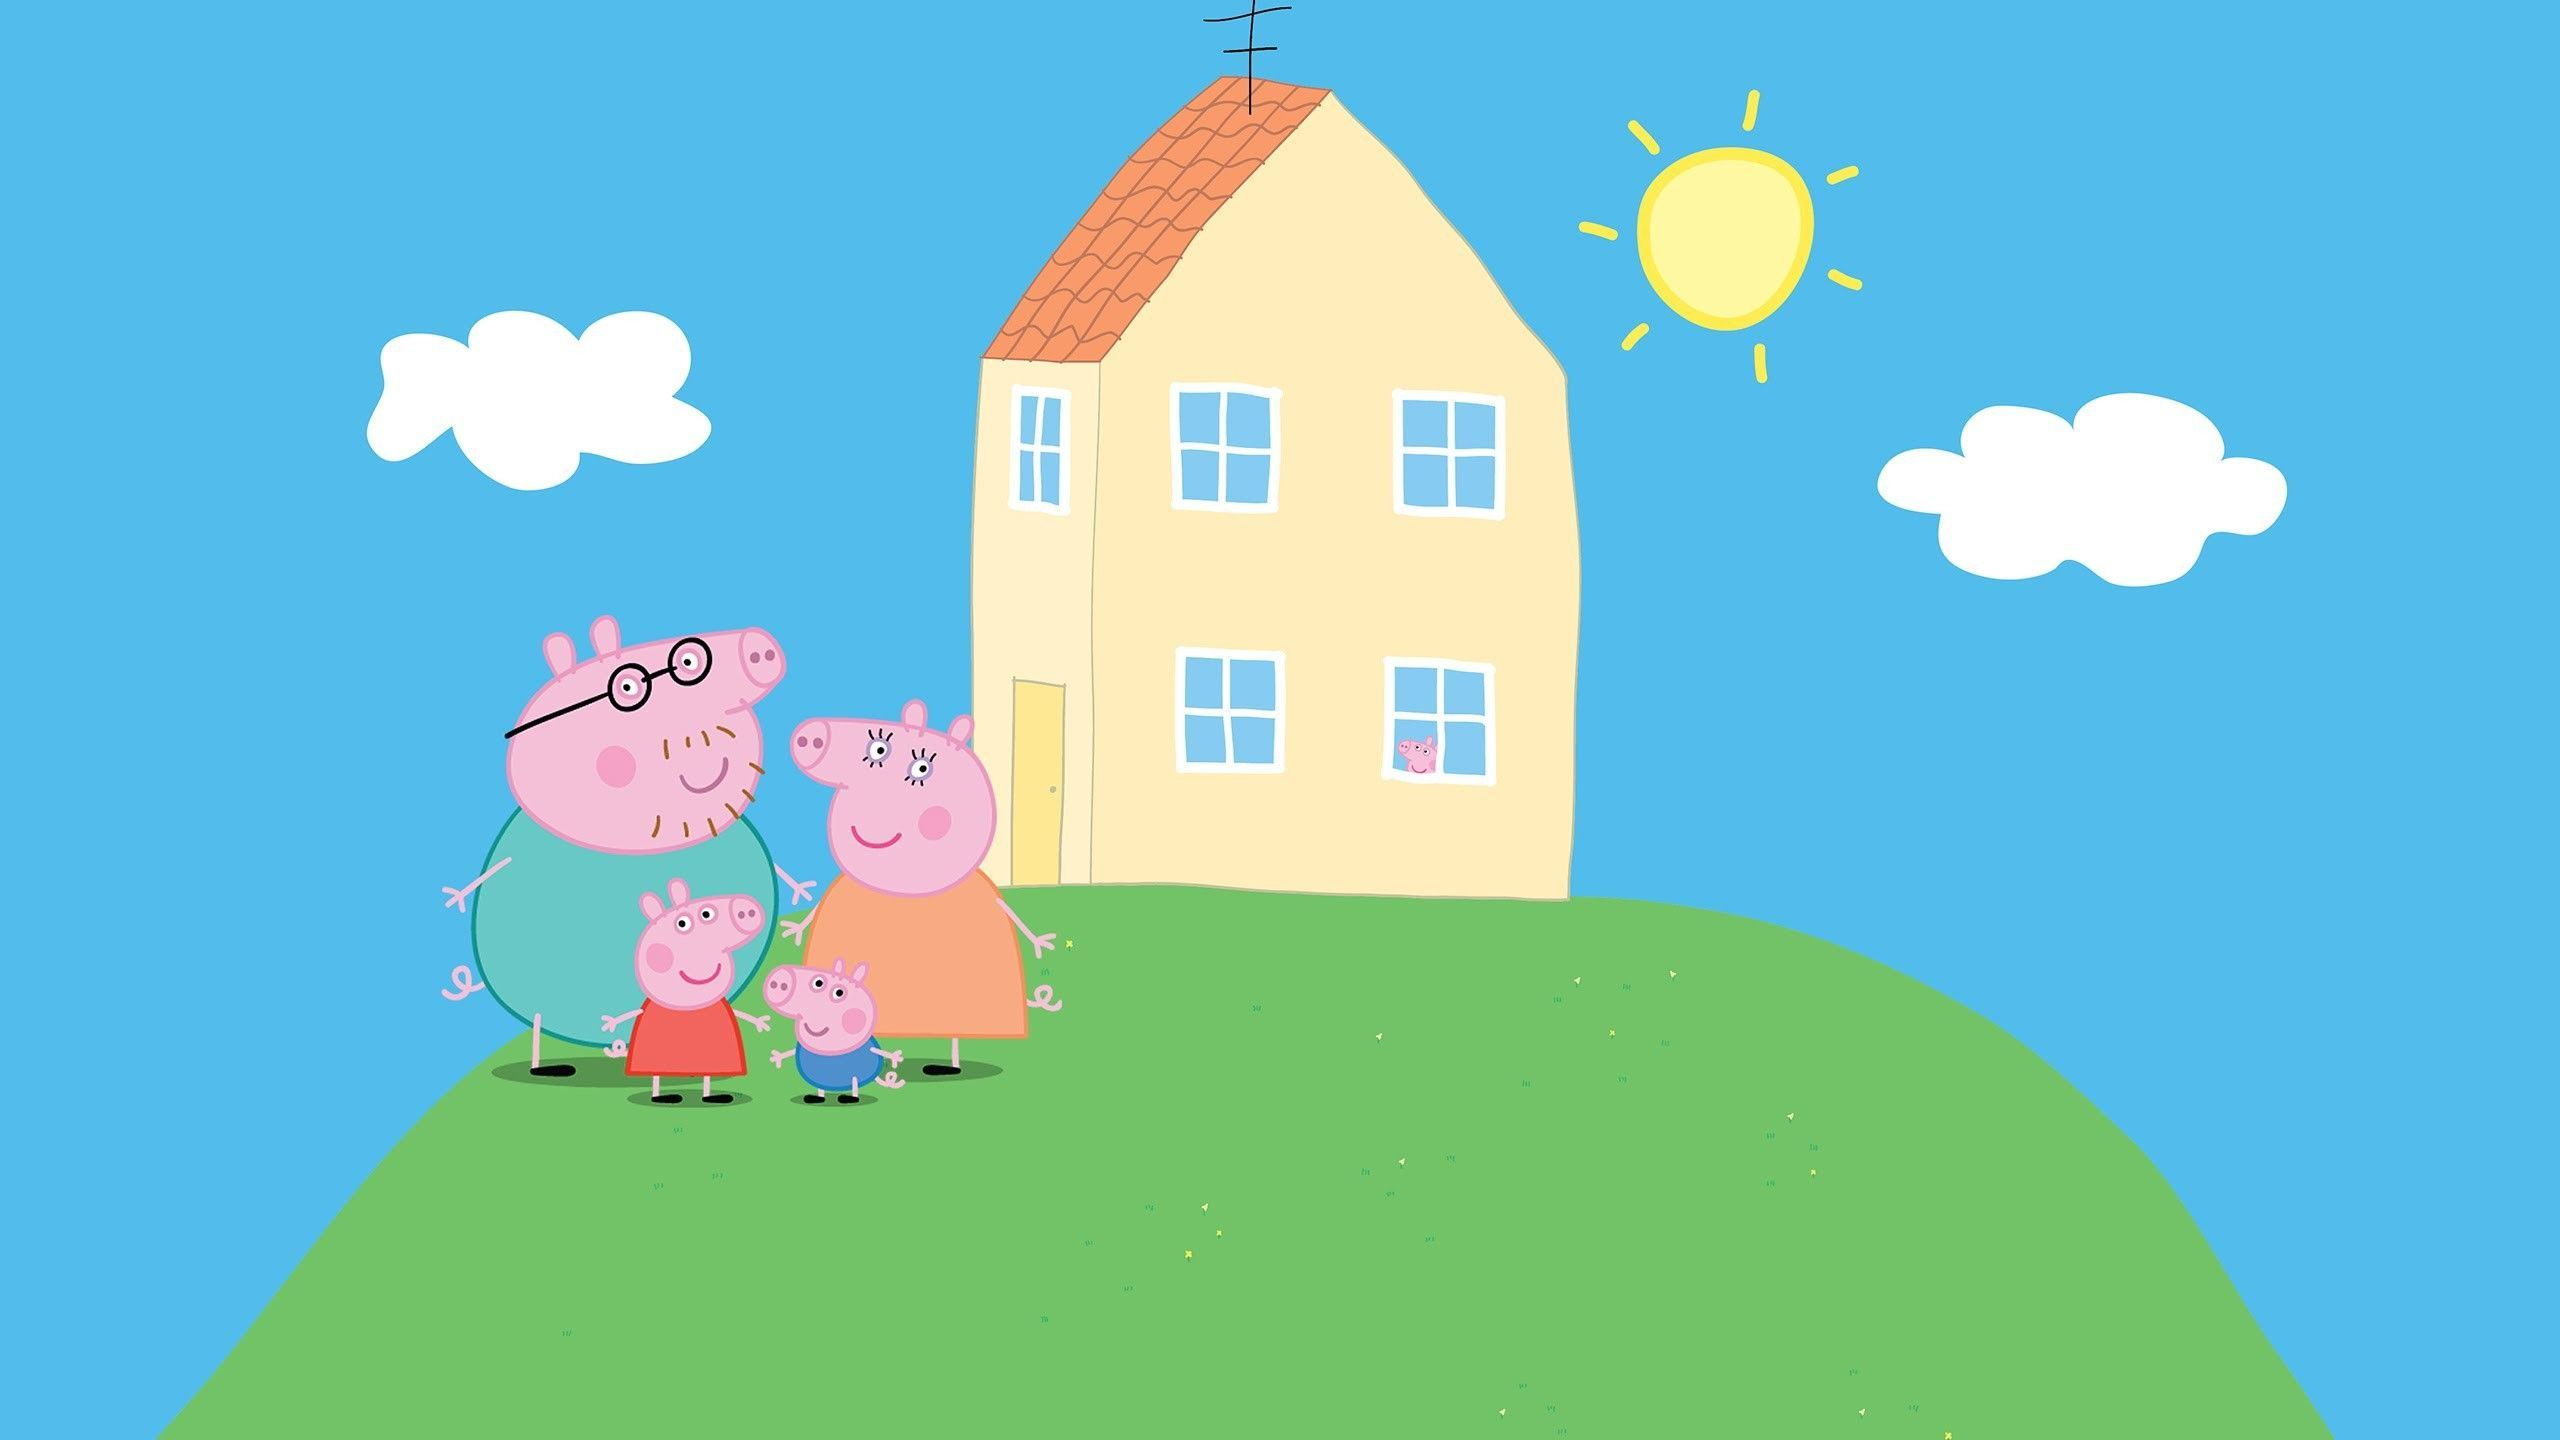 2560x1440 Peppa Pig Zoom Background | Peppa pig house, Peppa pig background, Peppa pig images